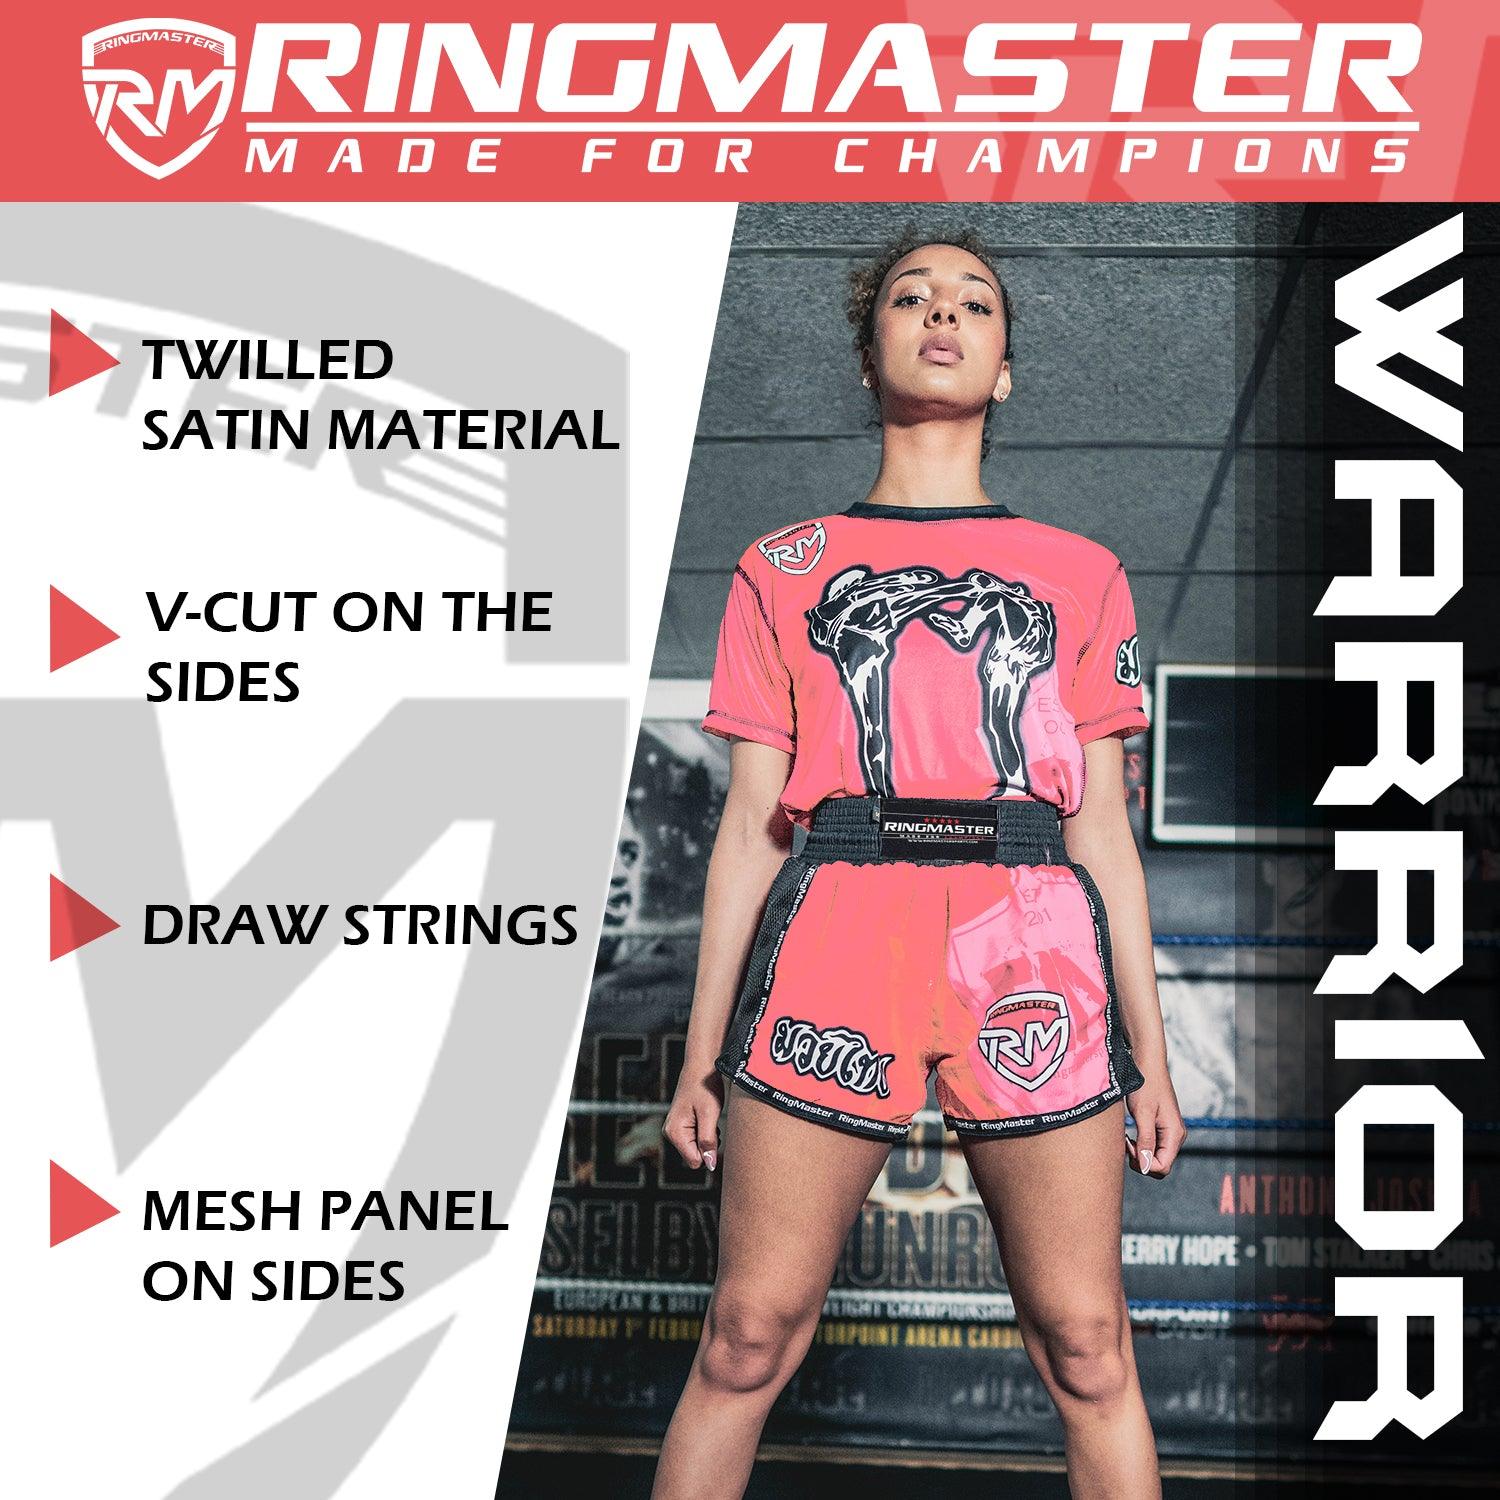 RingMaster Sports Warrior Thai / Kickboxing Shorts Salmon Pink - RINGMASTER SPORTS - Made For Champions